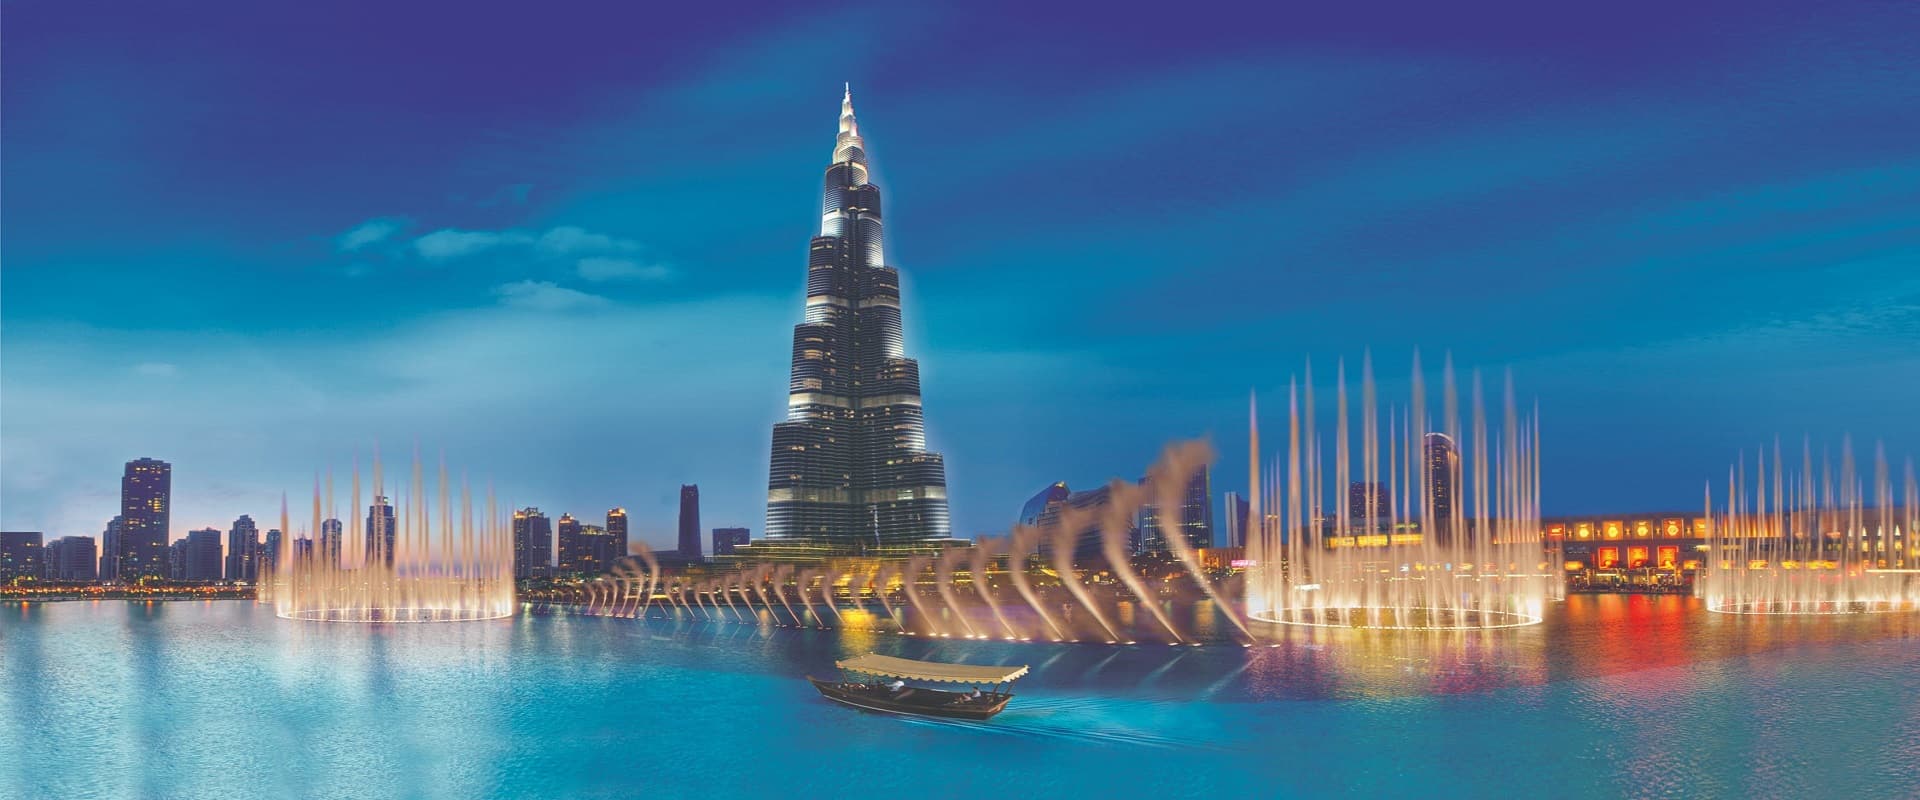 Burj Khailfa Tickets – At The Top – Level 125 + 124